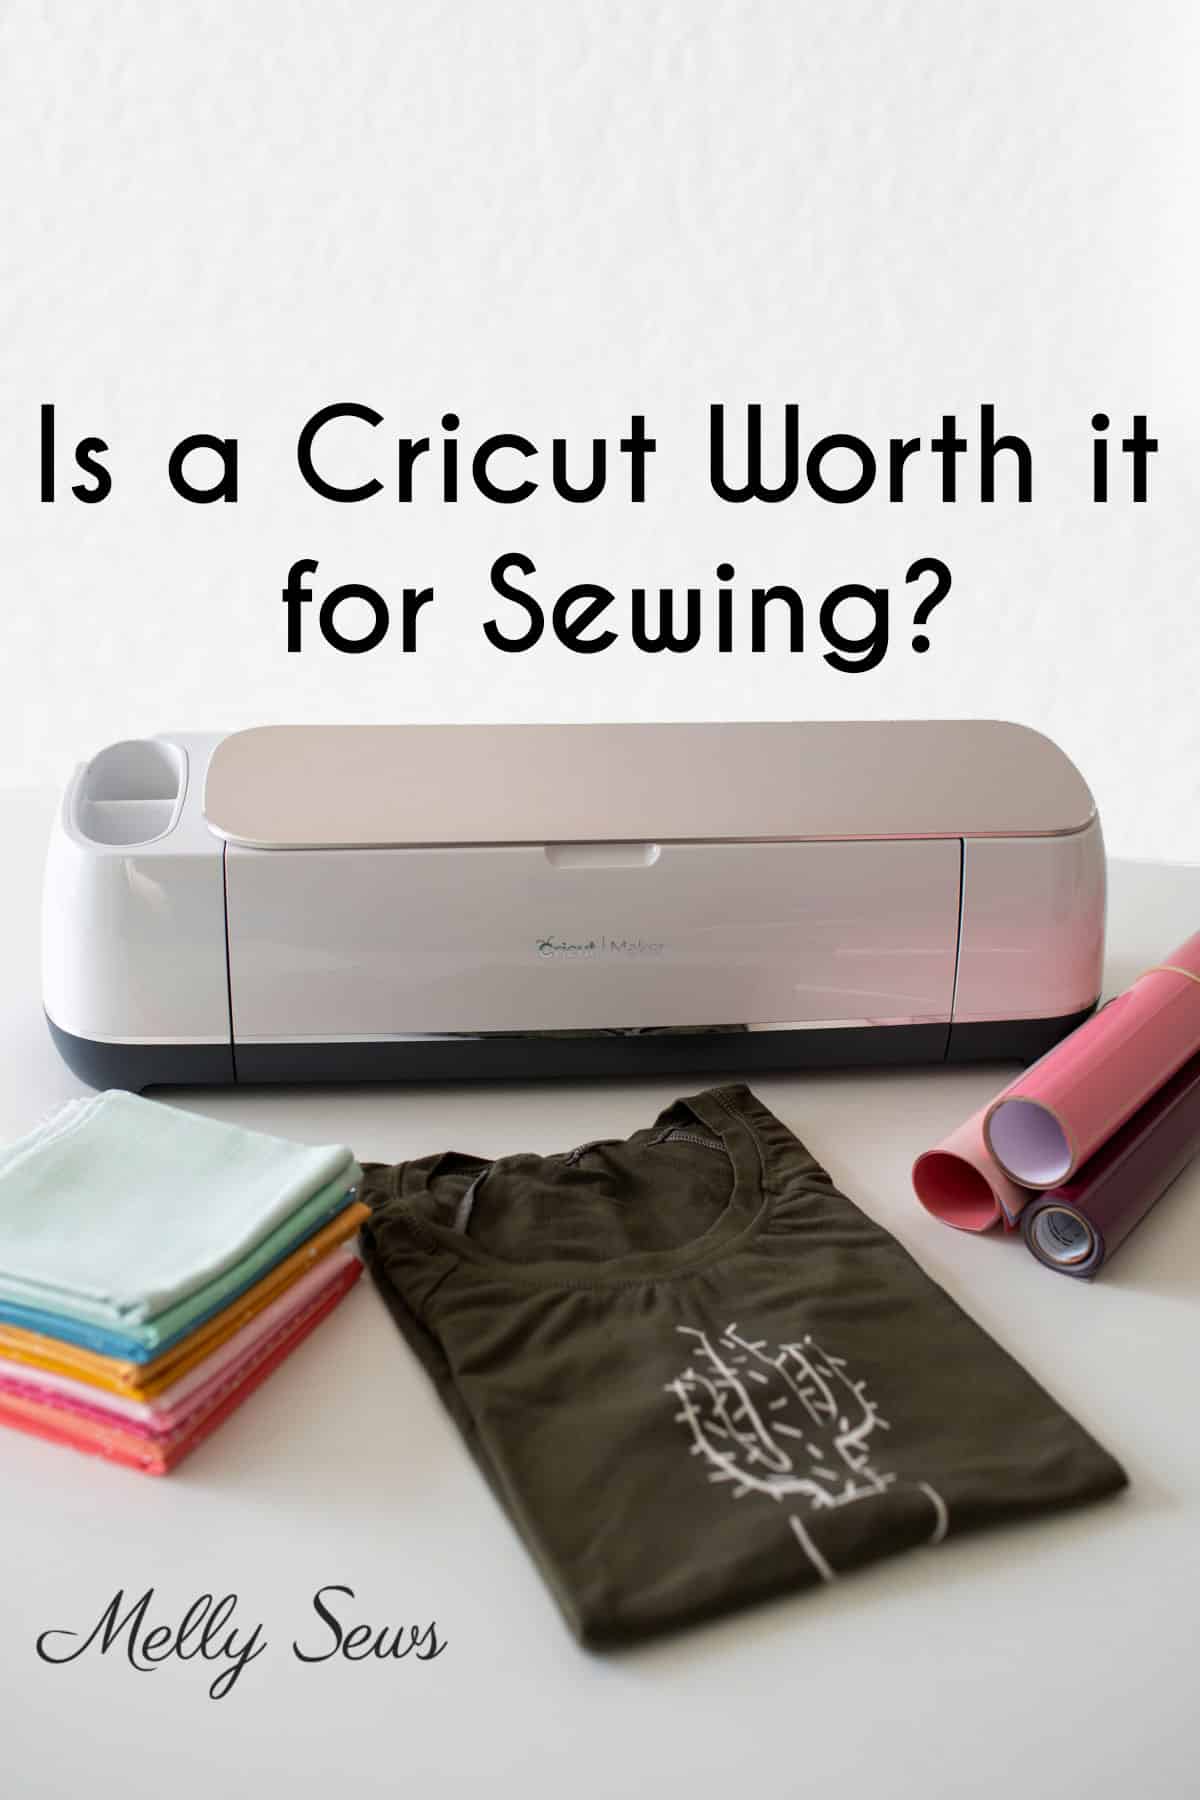 Cricut Tutorial: Tagless clothing labels using transfer vinyl – Sewing